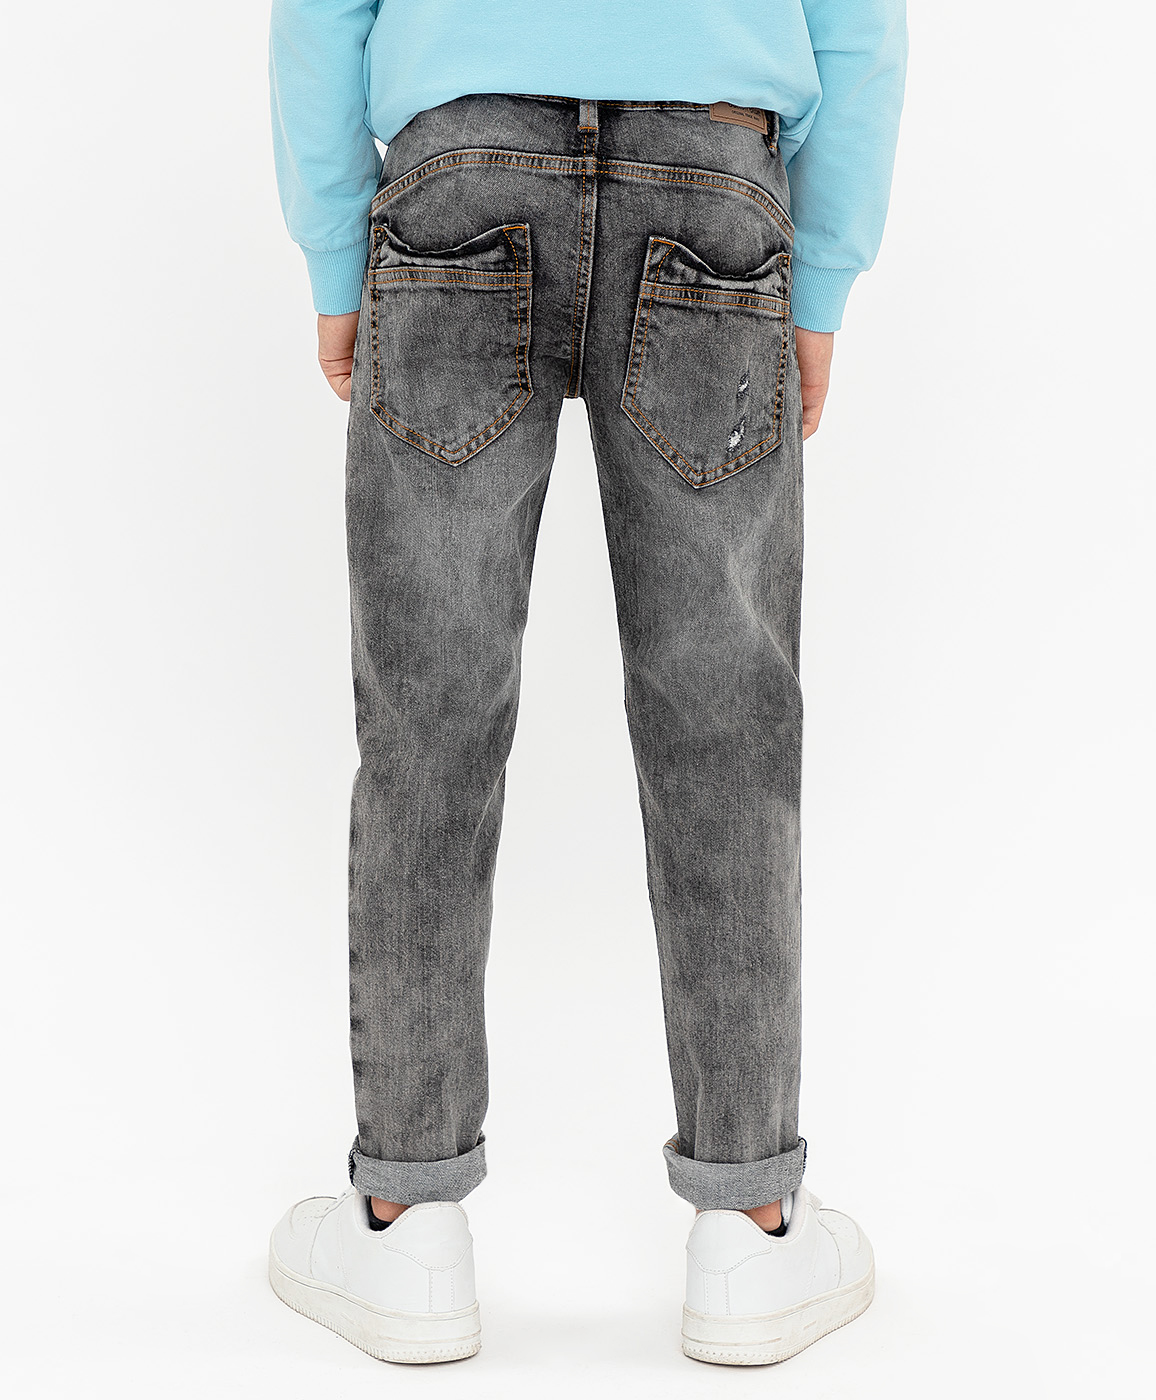 Серые джинсы Slim Fit Button Blue 120BBBC6305D300, размер 98, цвет серый - фото 5